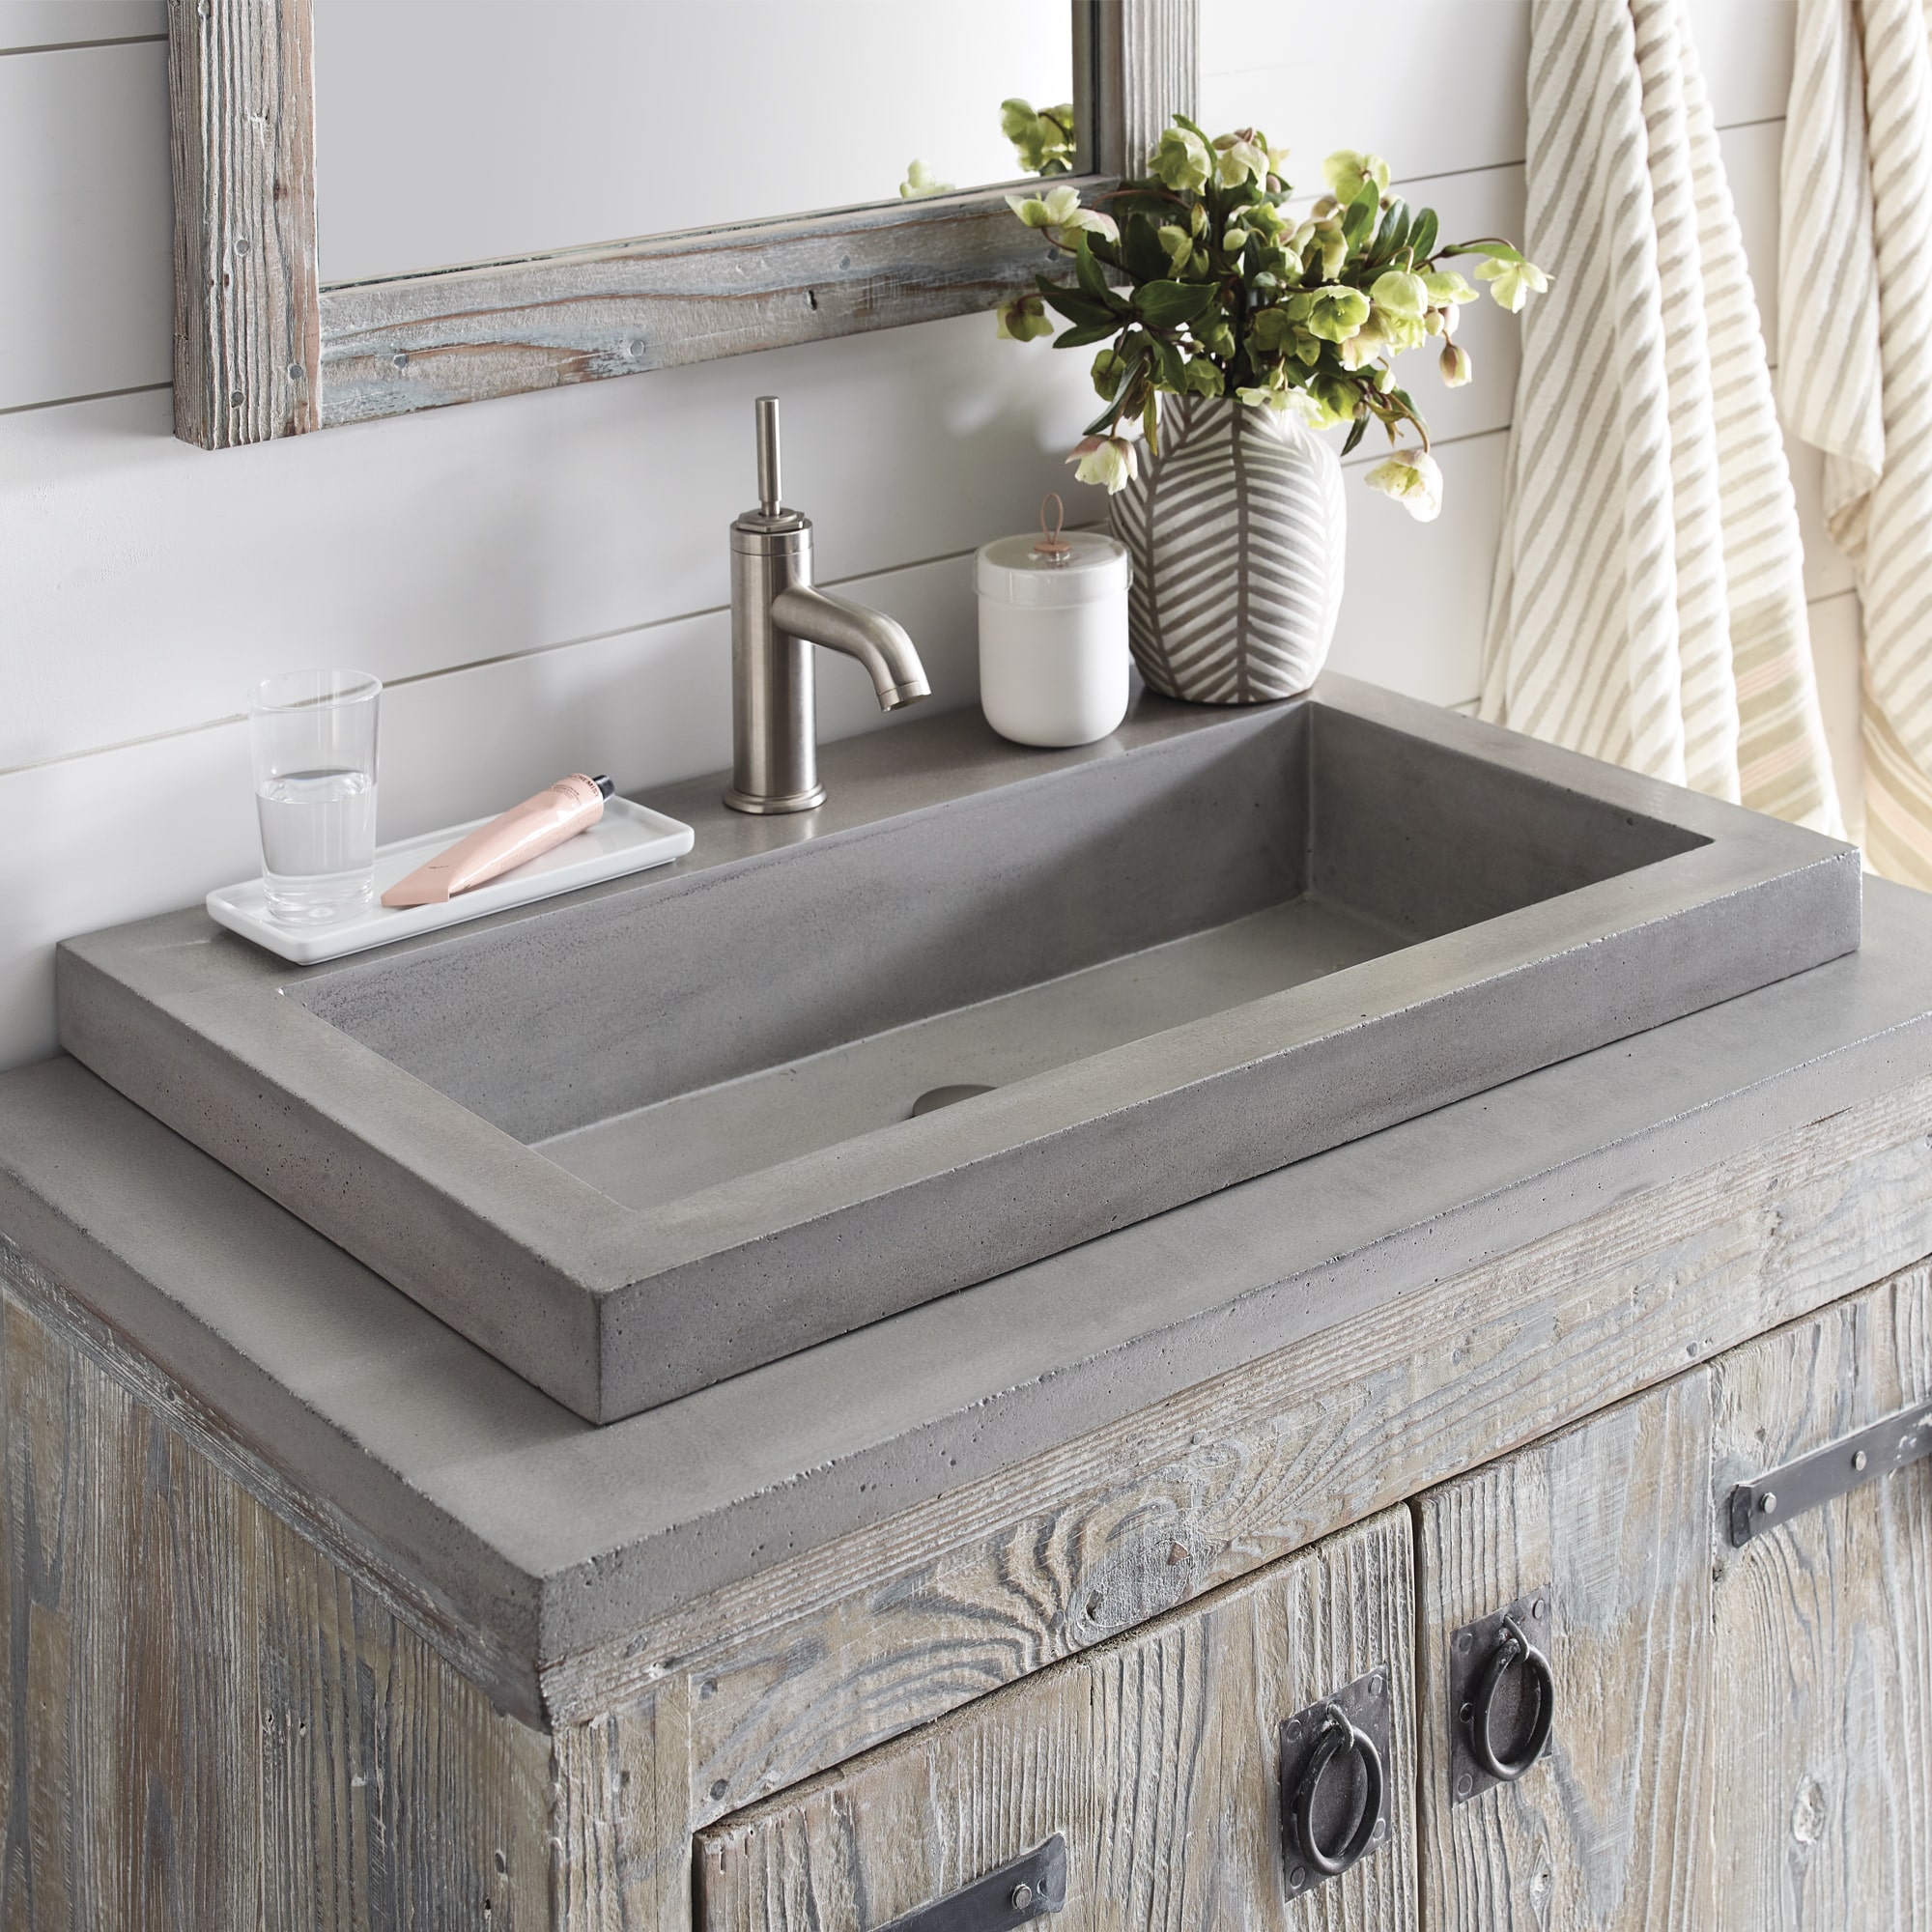 Trough 3019 30 Inch Concrete, Trough Sinks For Bathroom Vanity